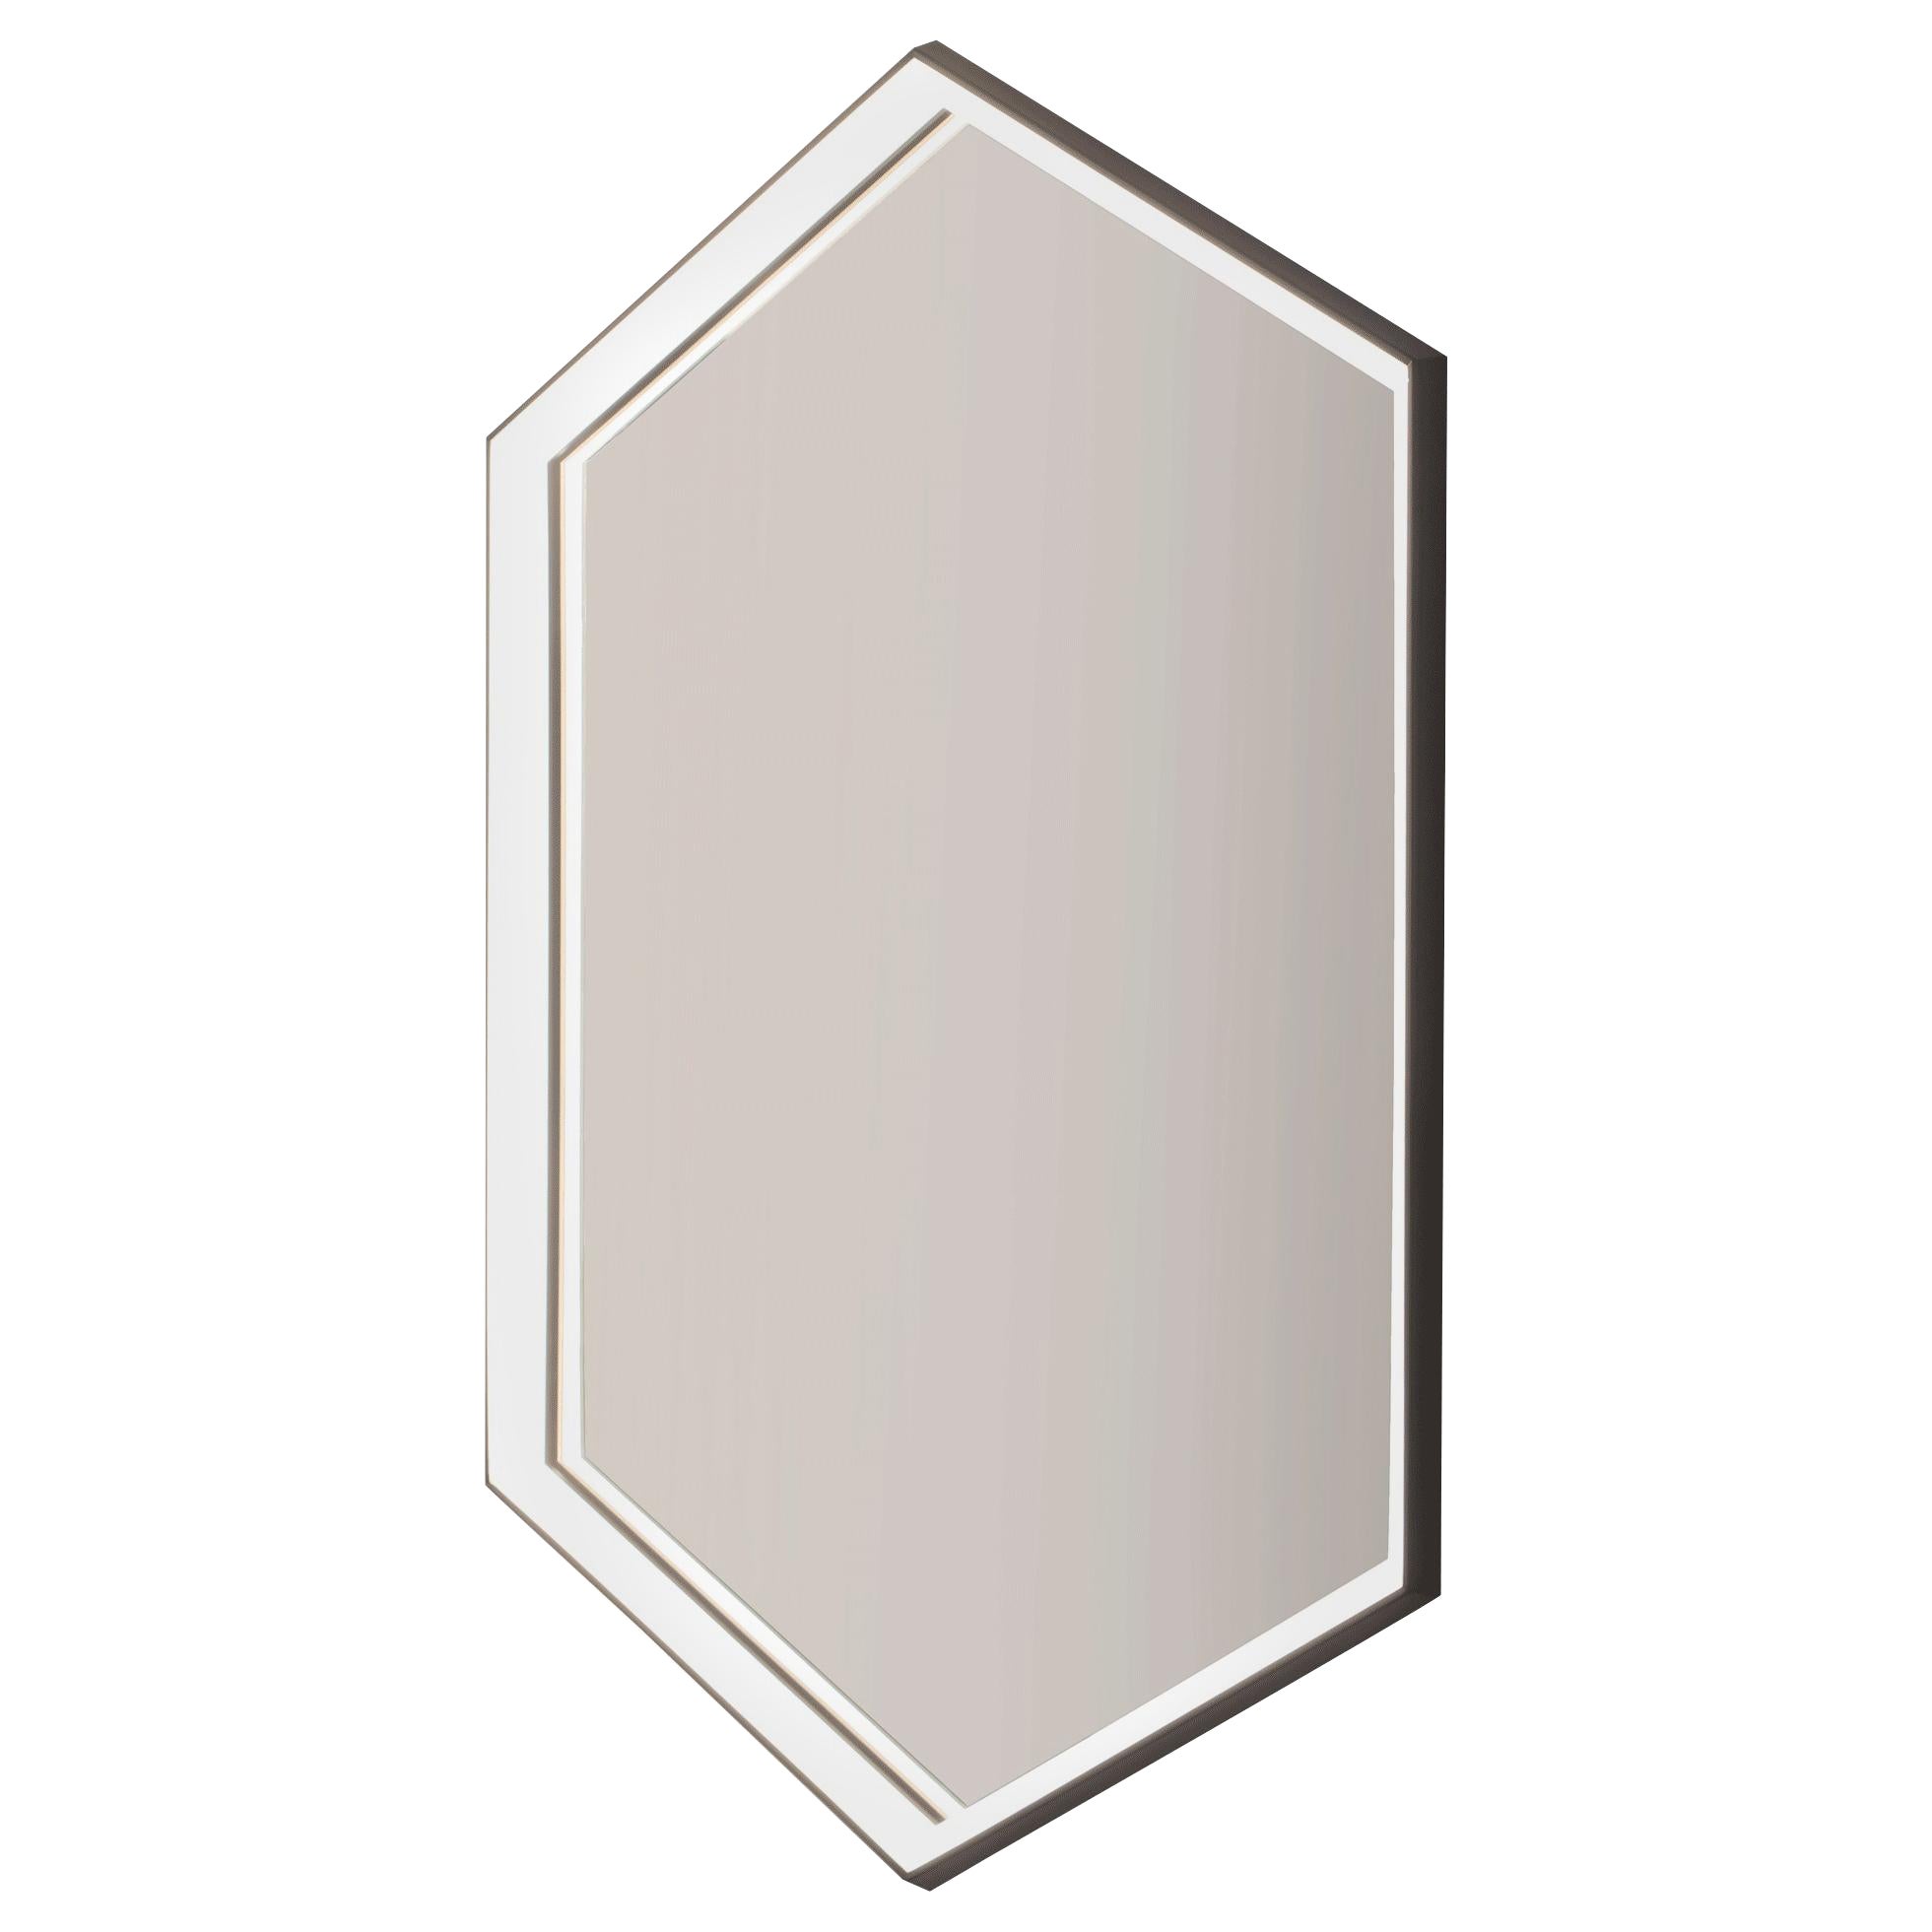 Kruos Mirror LM47, Hexagonal Edge Lit Vanity Powder Room or Makeup Mirror For Sale